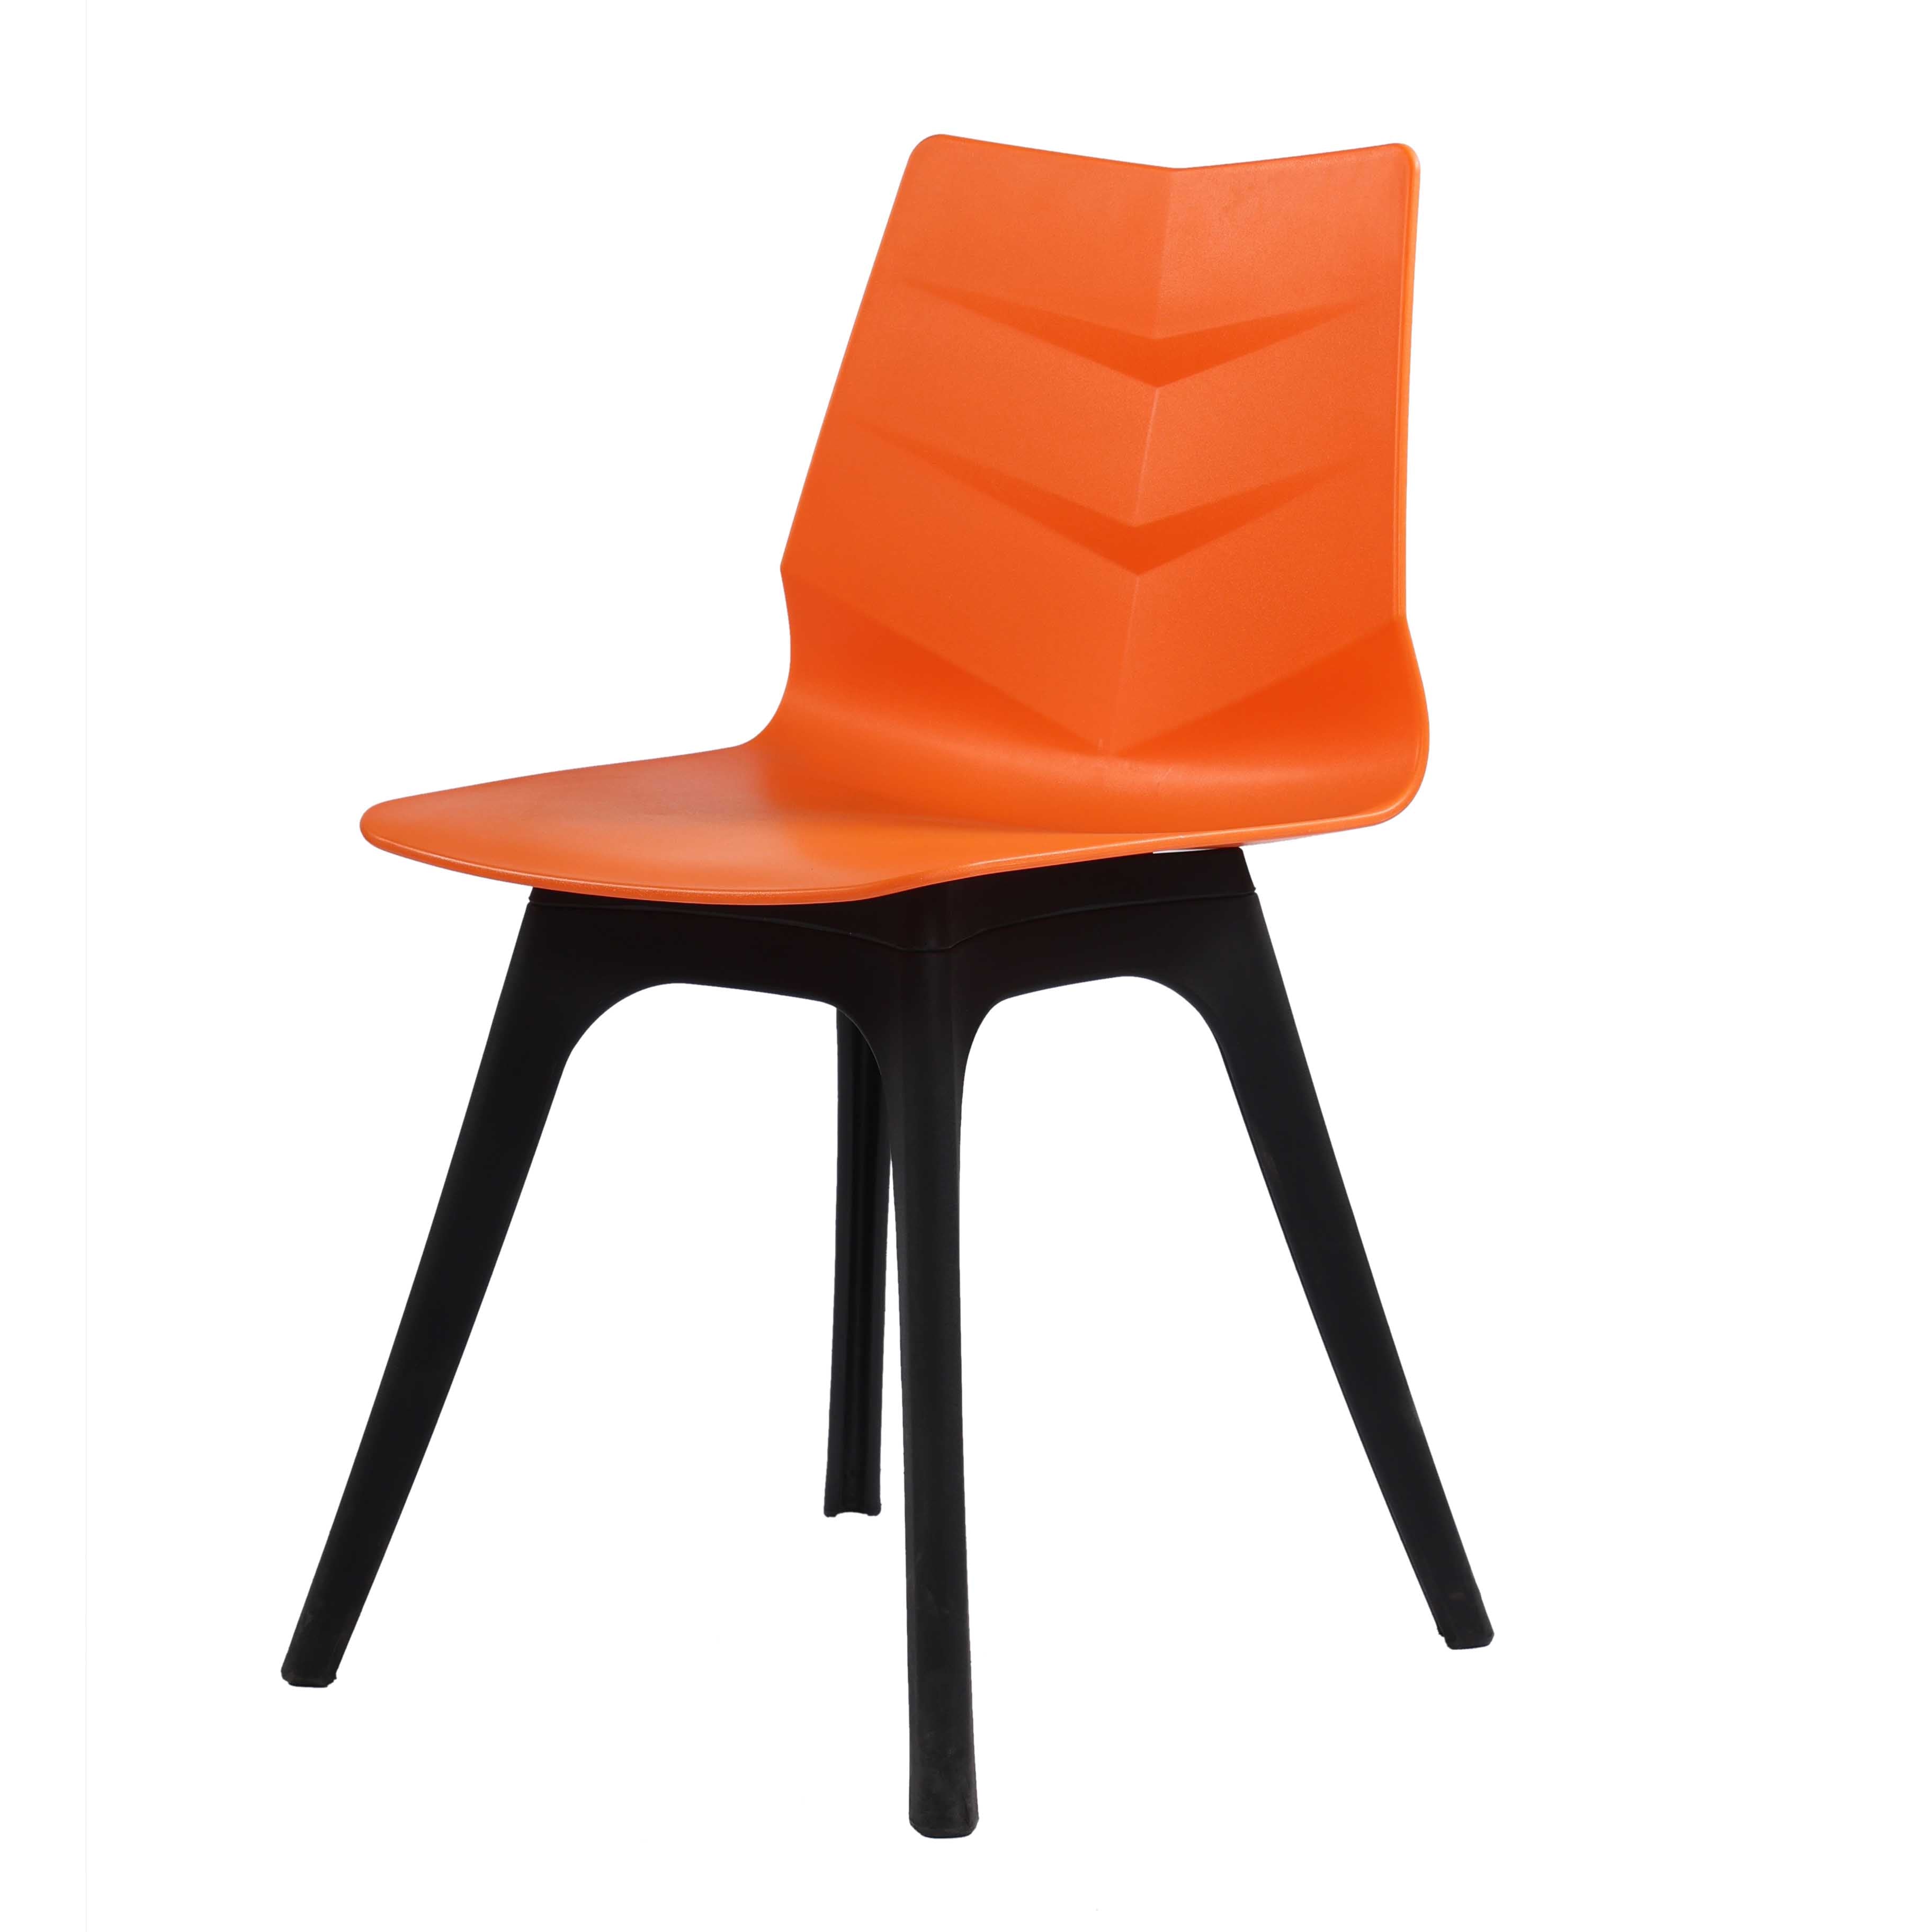 Leon Cafeteria Outdoor Plastic Chair - Orange Chair urbancart